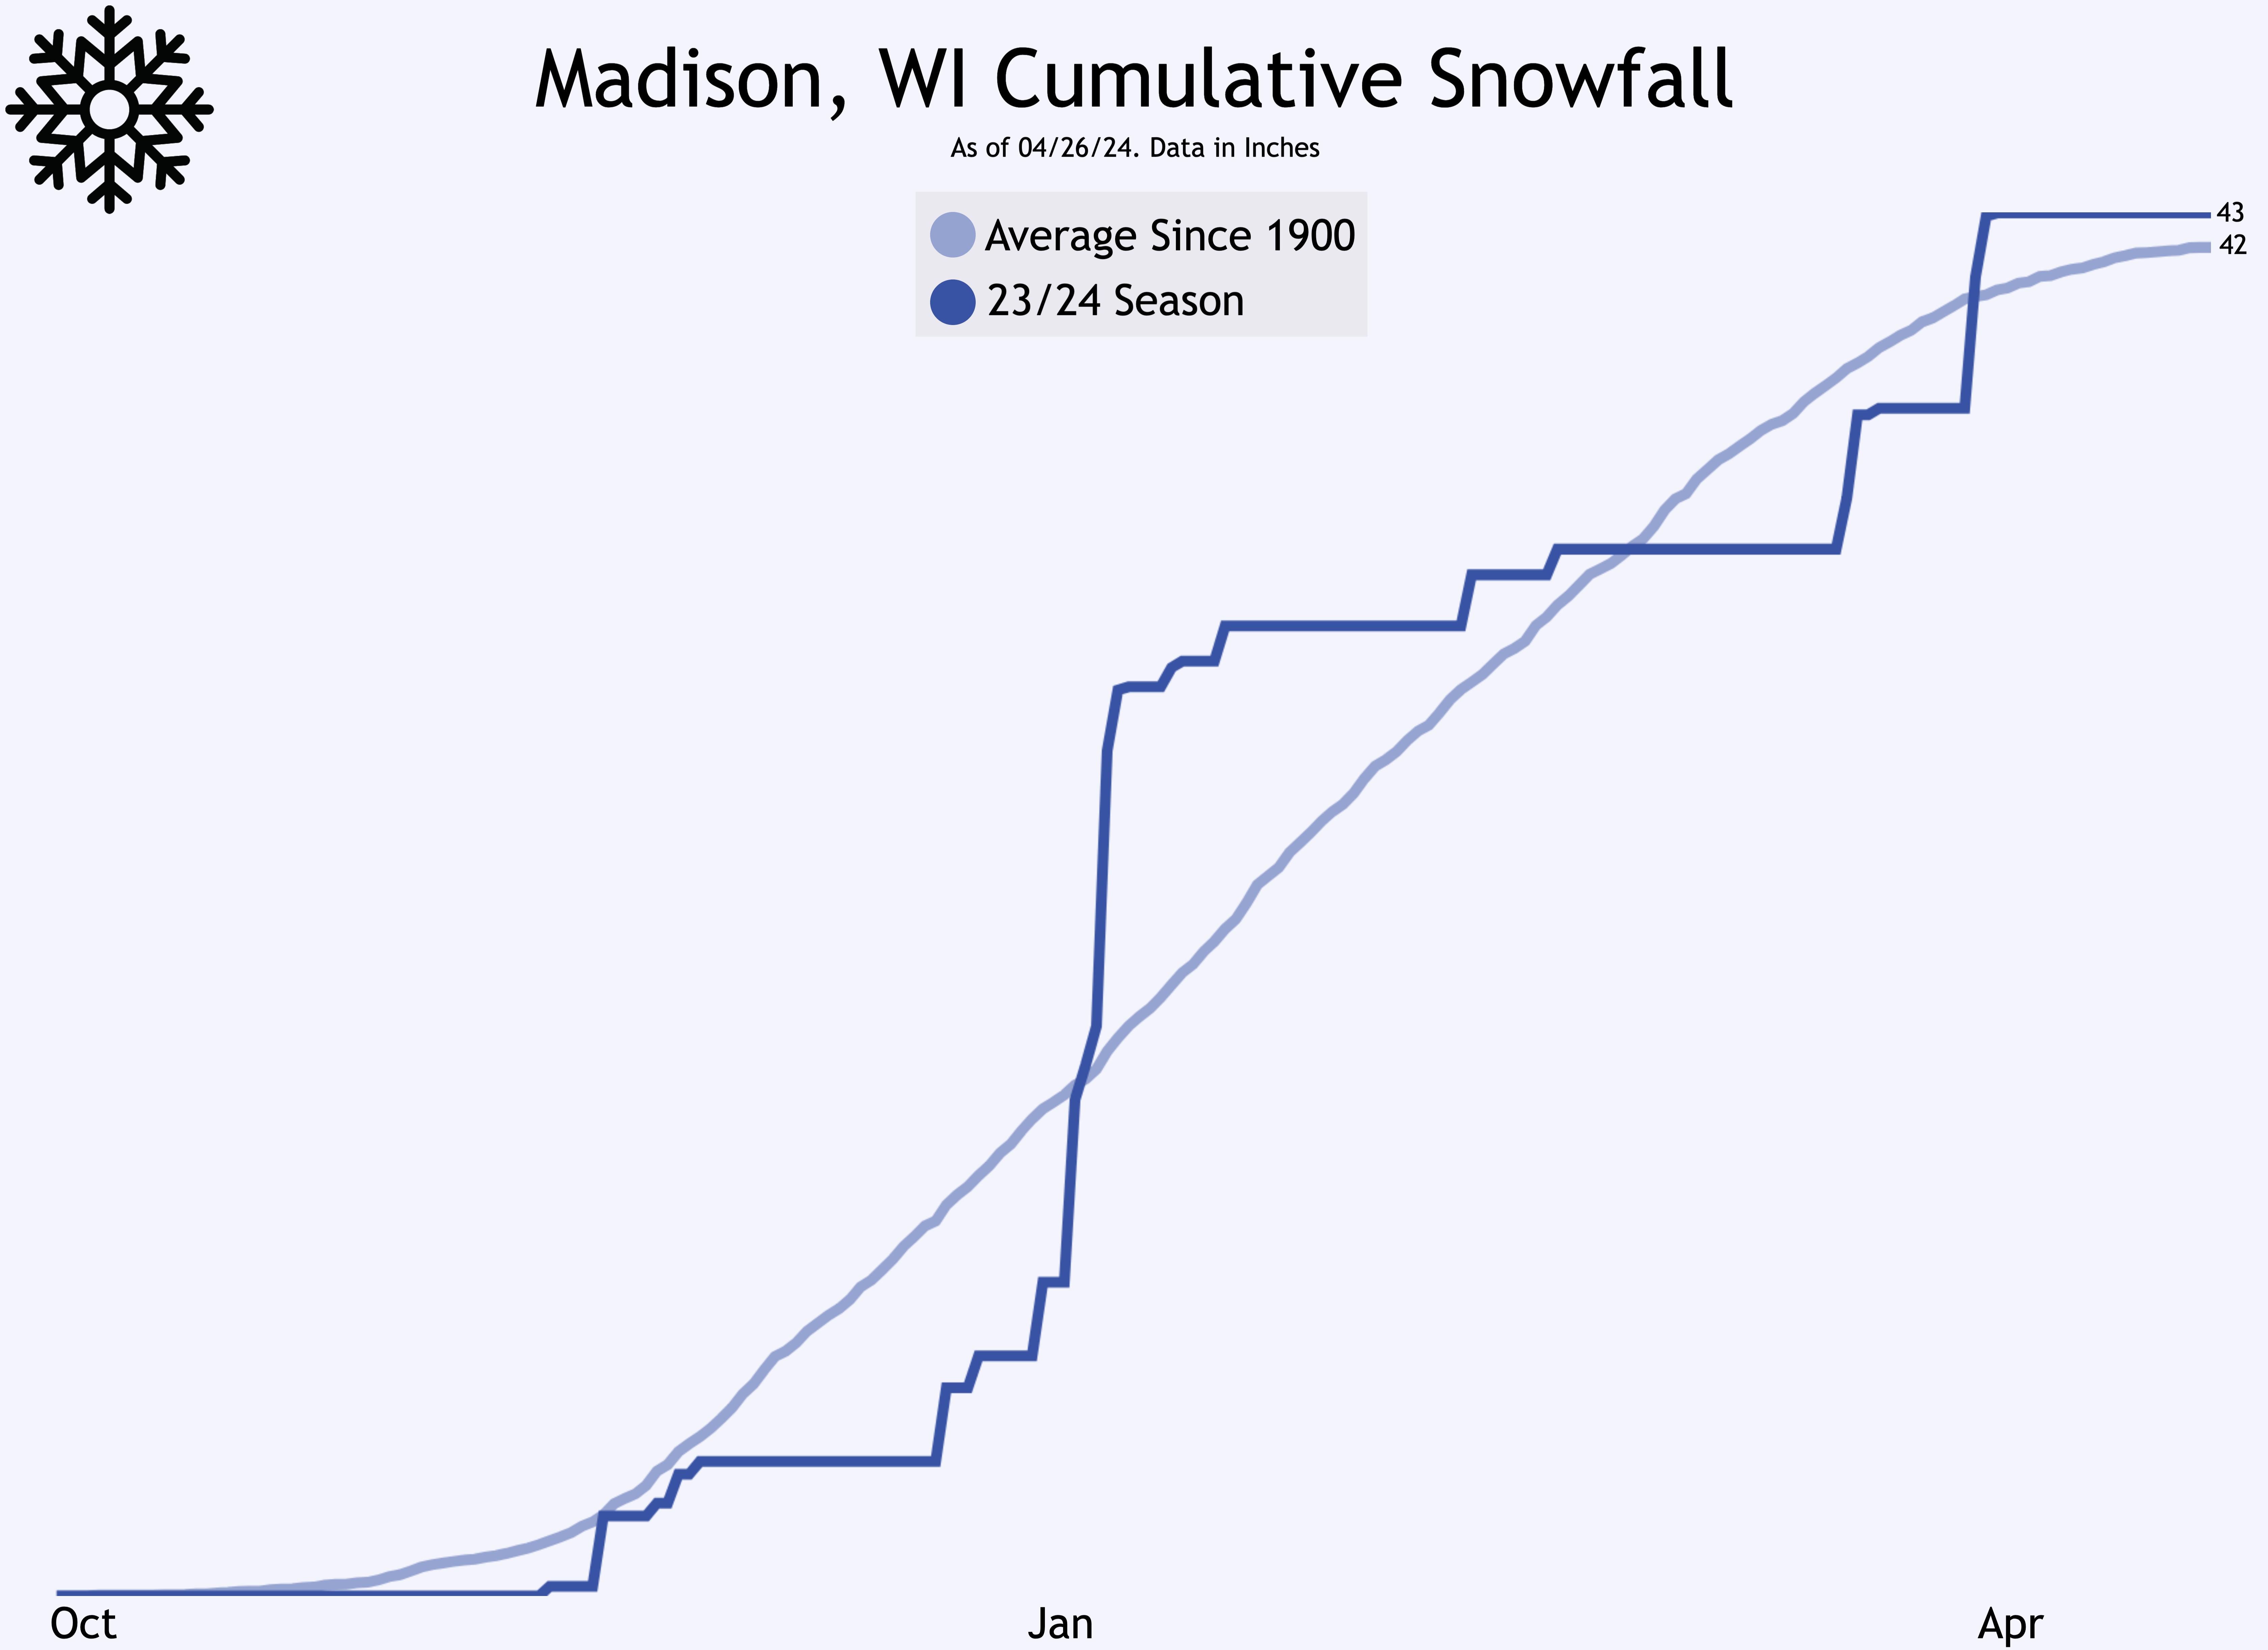 Madison WI, Updated Cumulative Snowfall Against Average